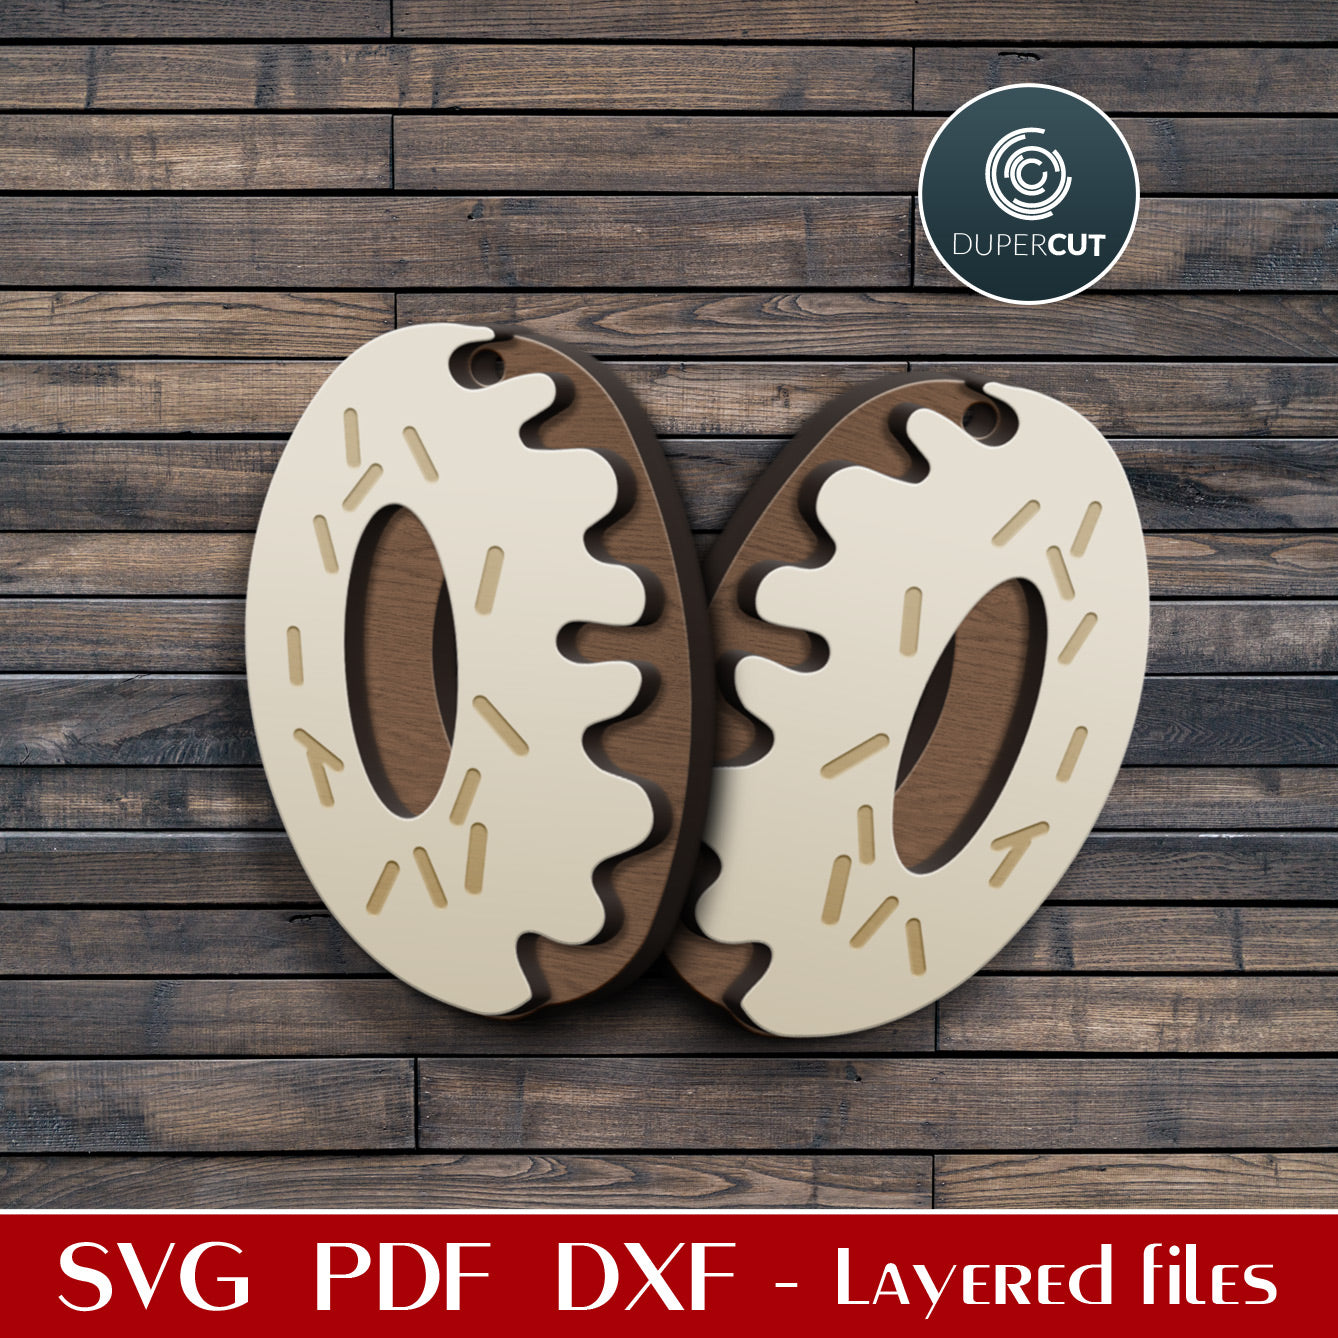 Donut earrings - SVG DXF laser cutting files template pattern for Glowforge, Cricut, Silhouette, CNC plasma machines by www.DuperCut.com